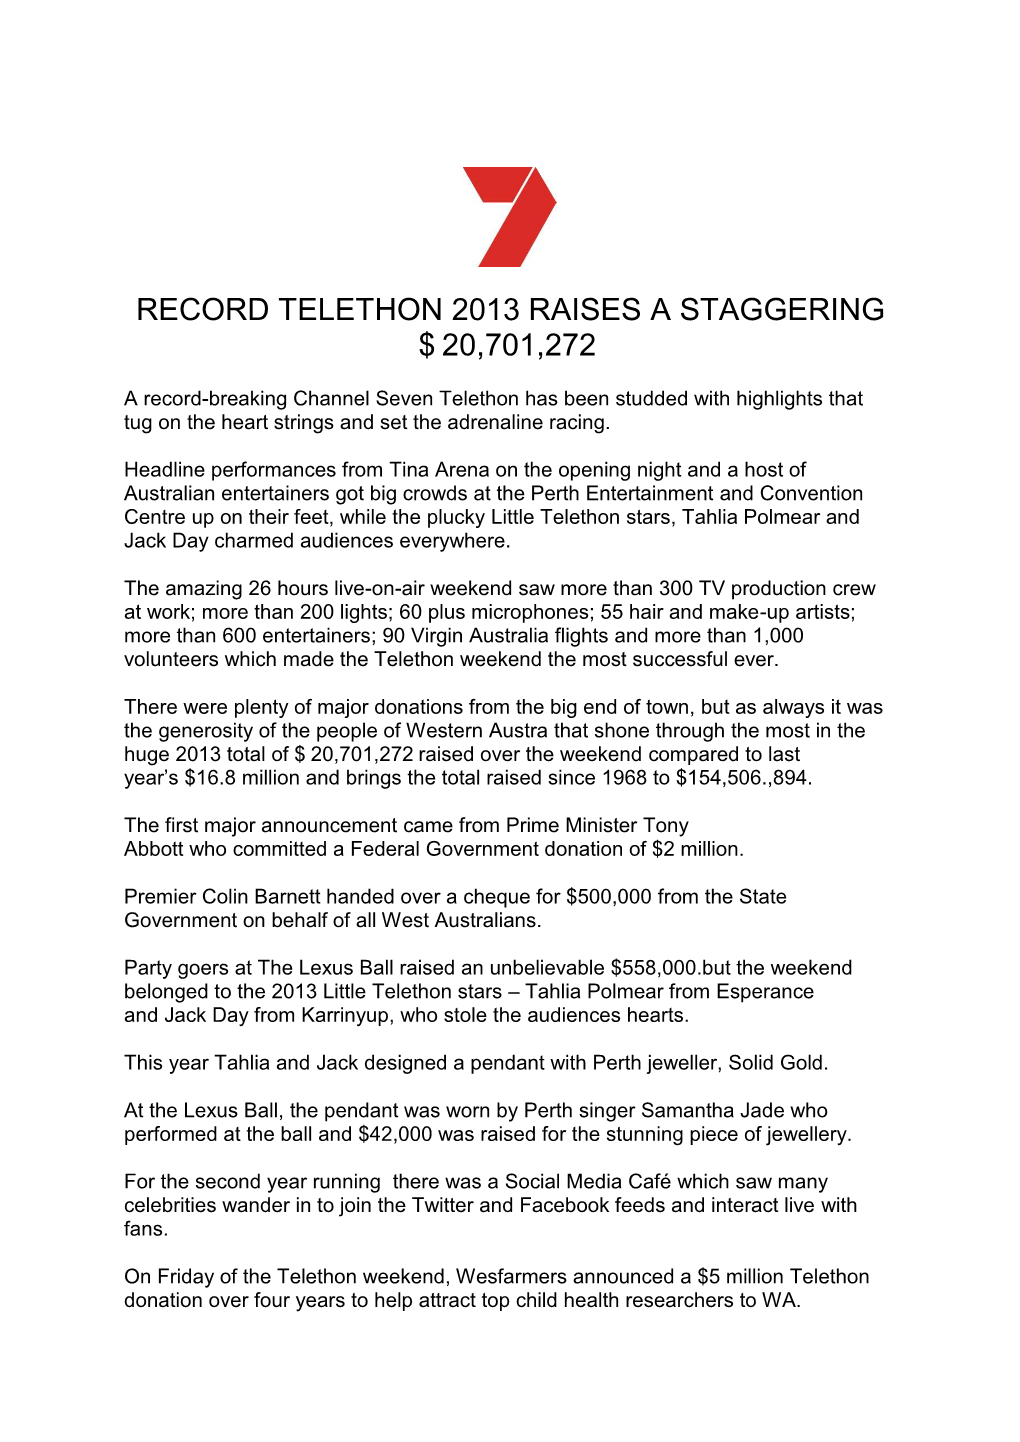 Record Telethon 2013 Raises a Staggering $ 20,701,272